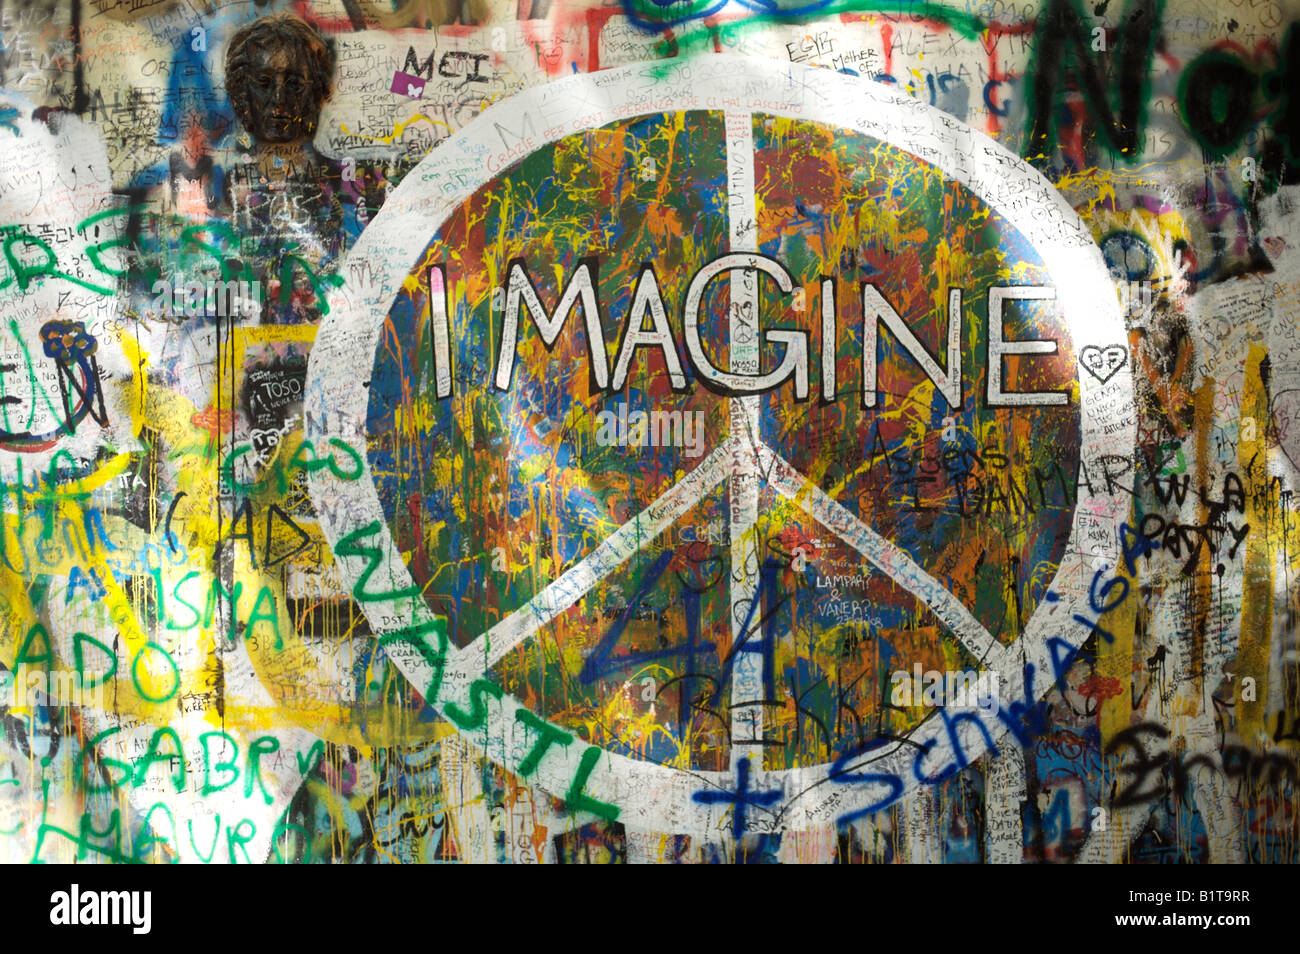 imagine peace graffiti prague Stock Photo